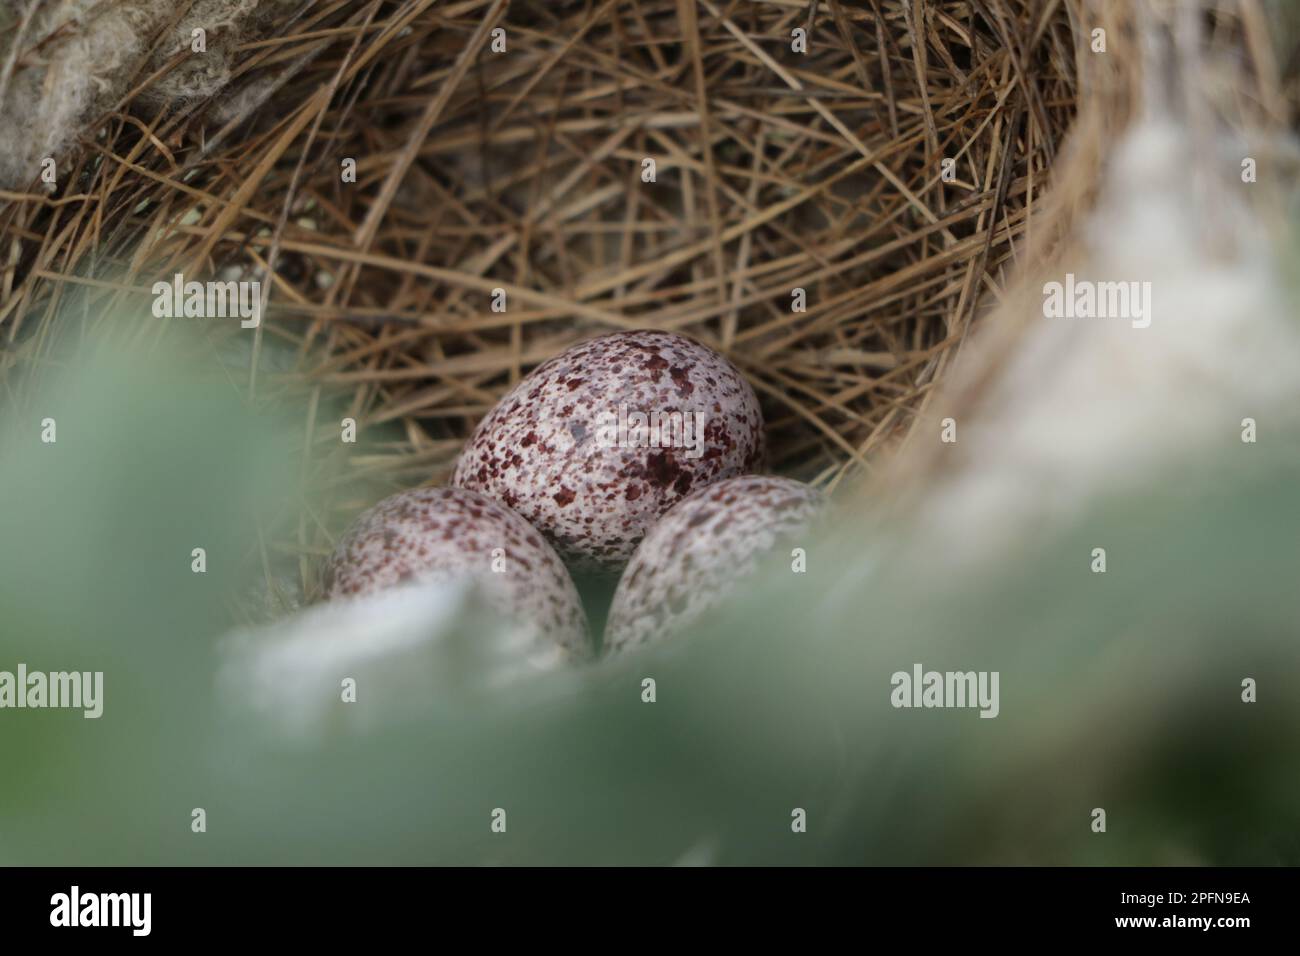 Bird's nest in natural habitat. Stock Photo